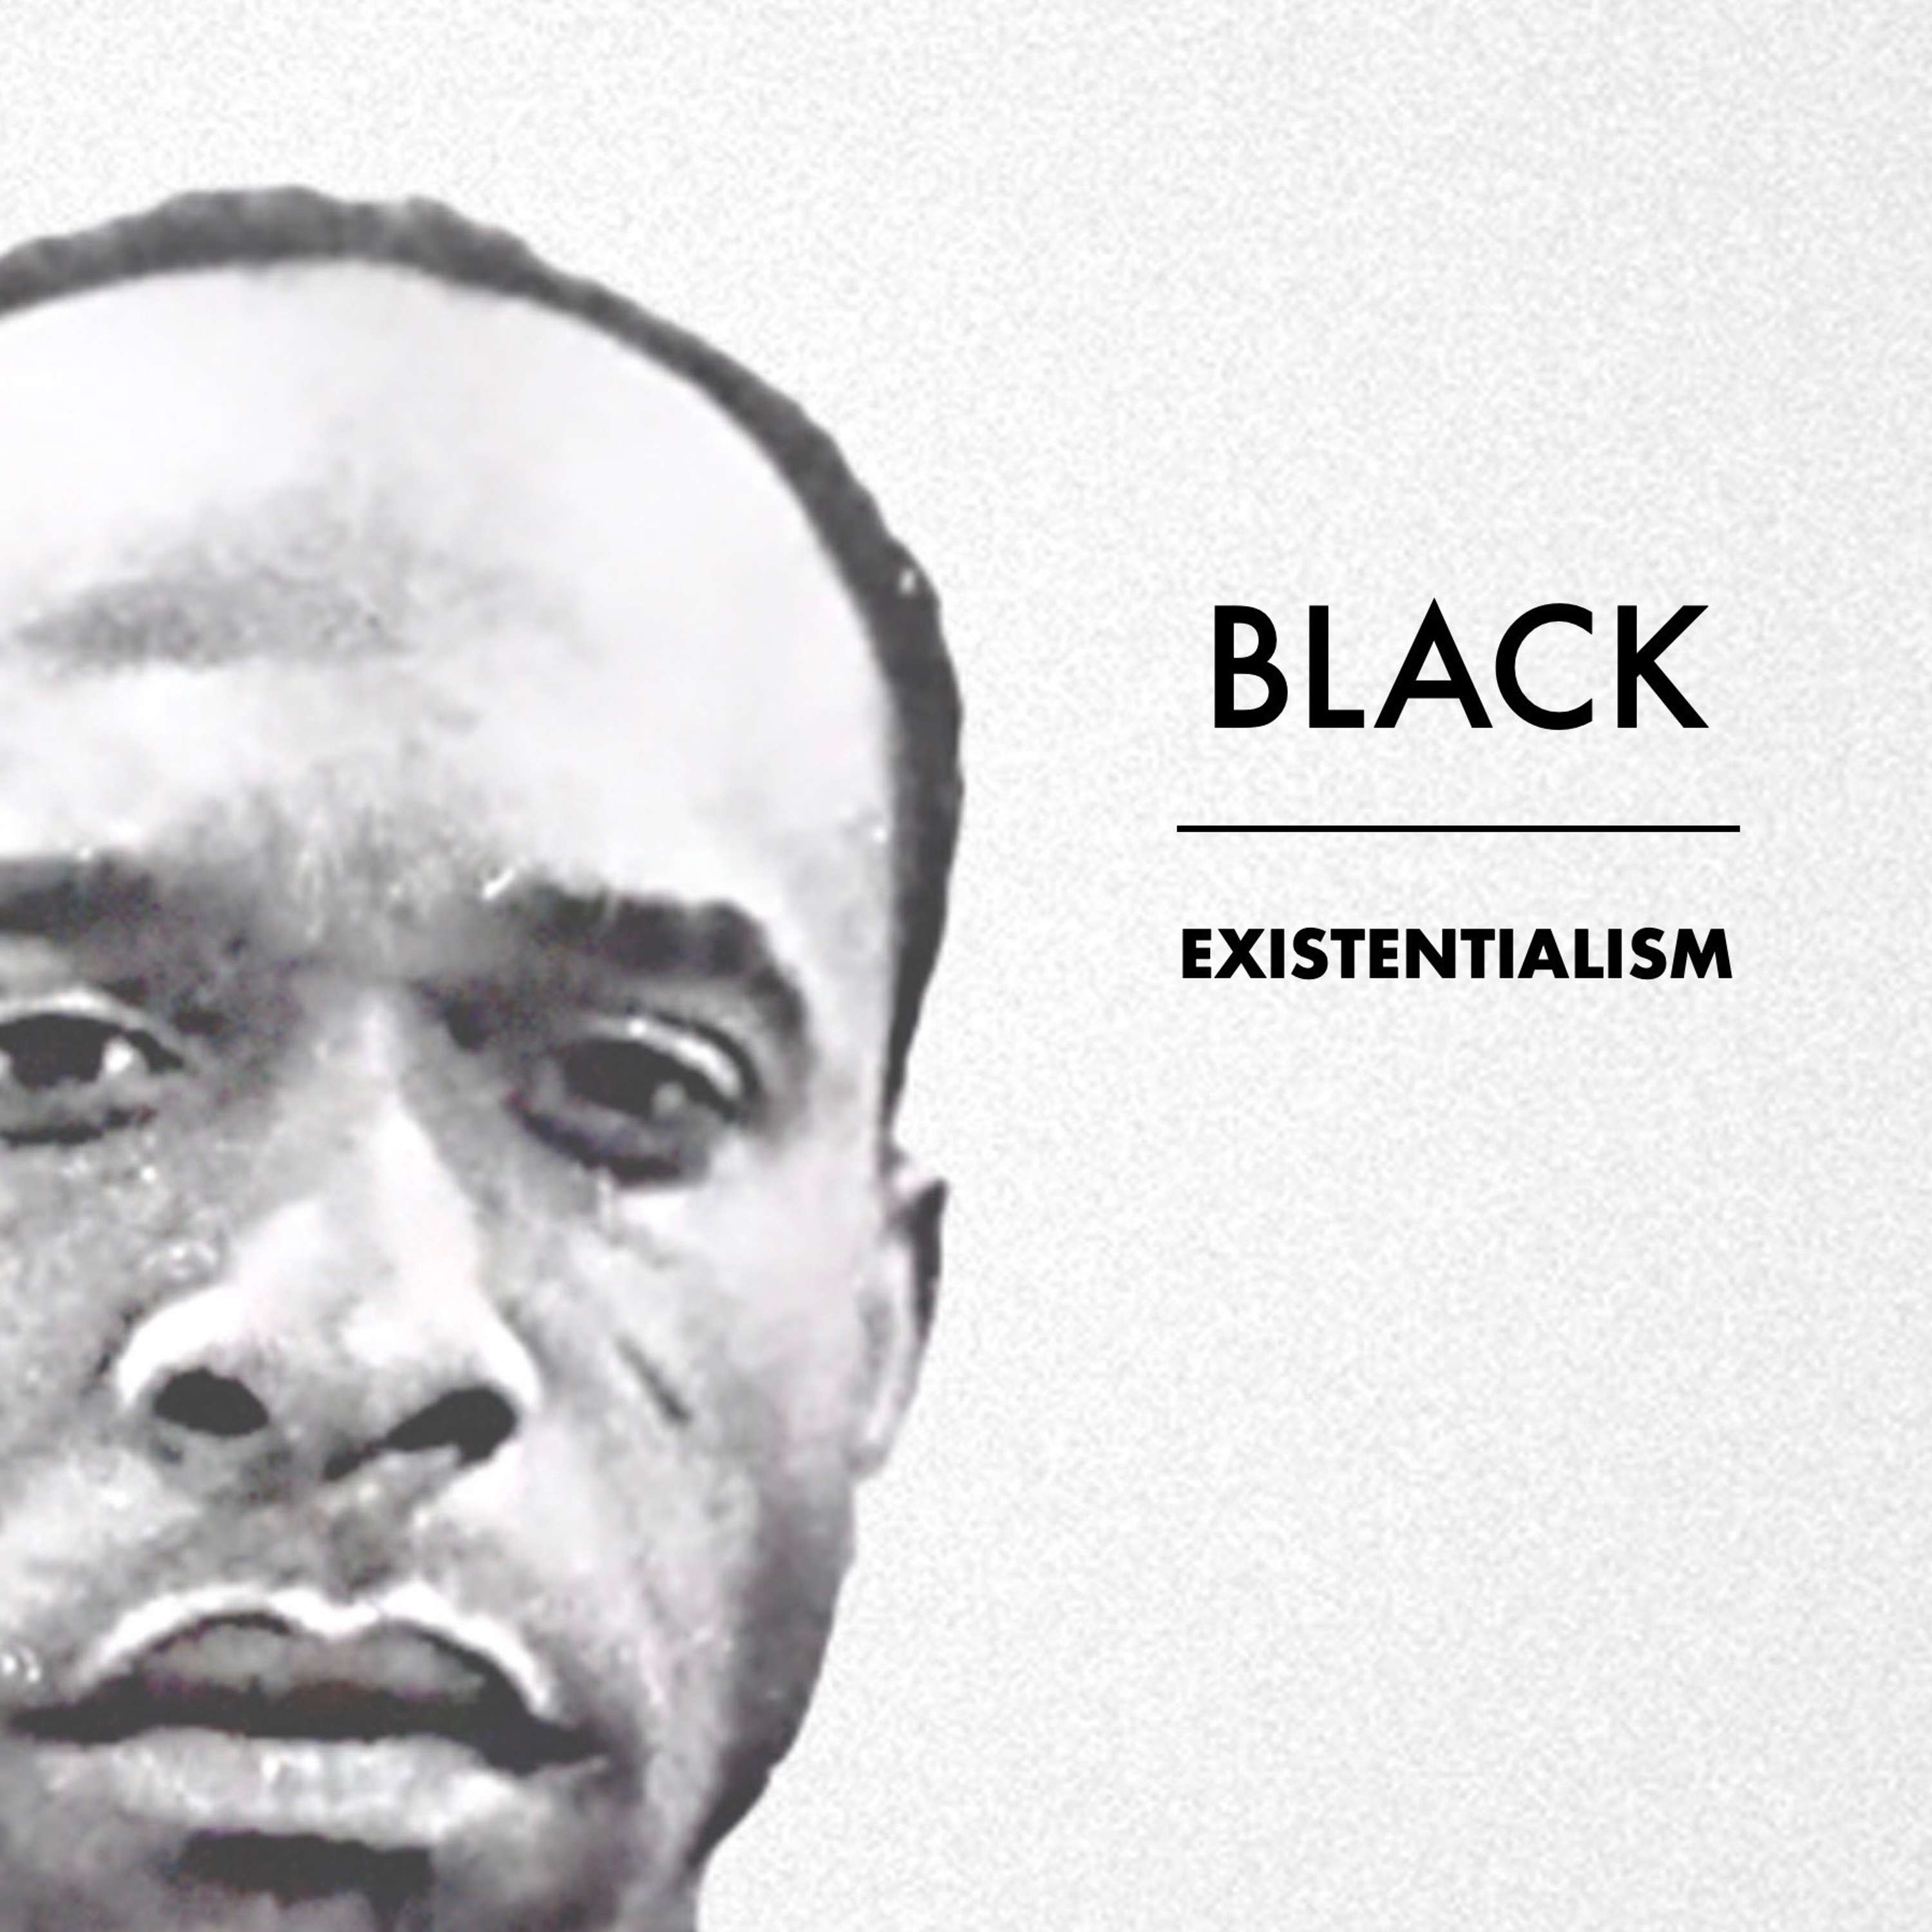 Black Existentialism Image